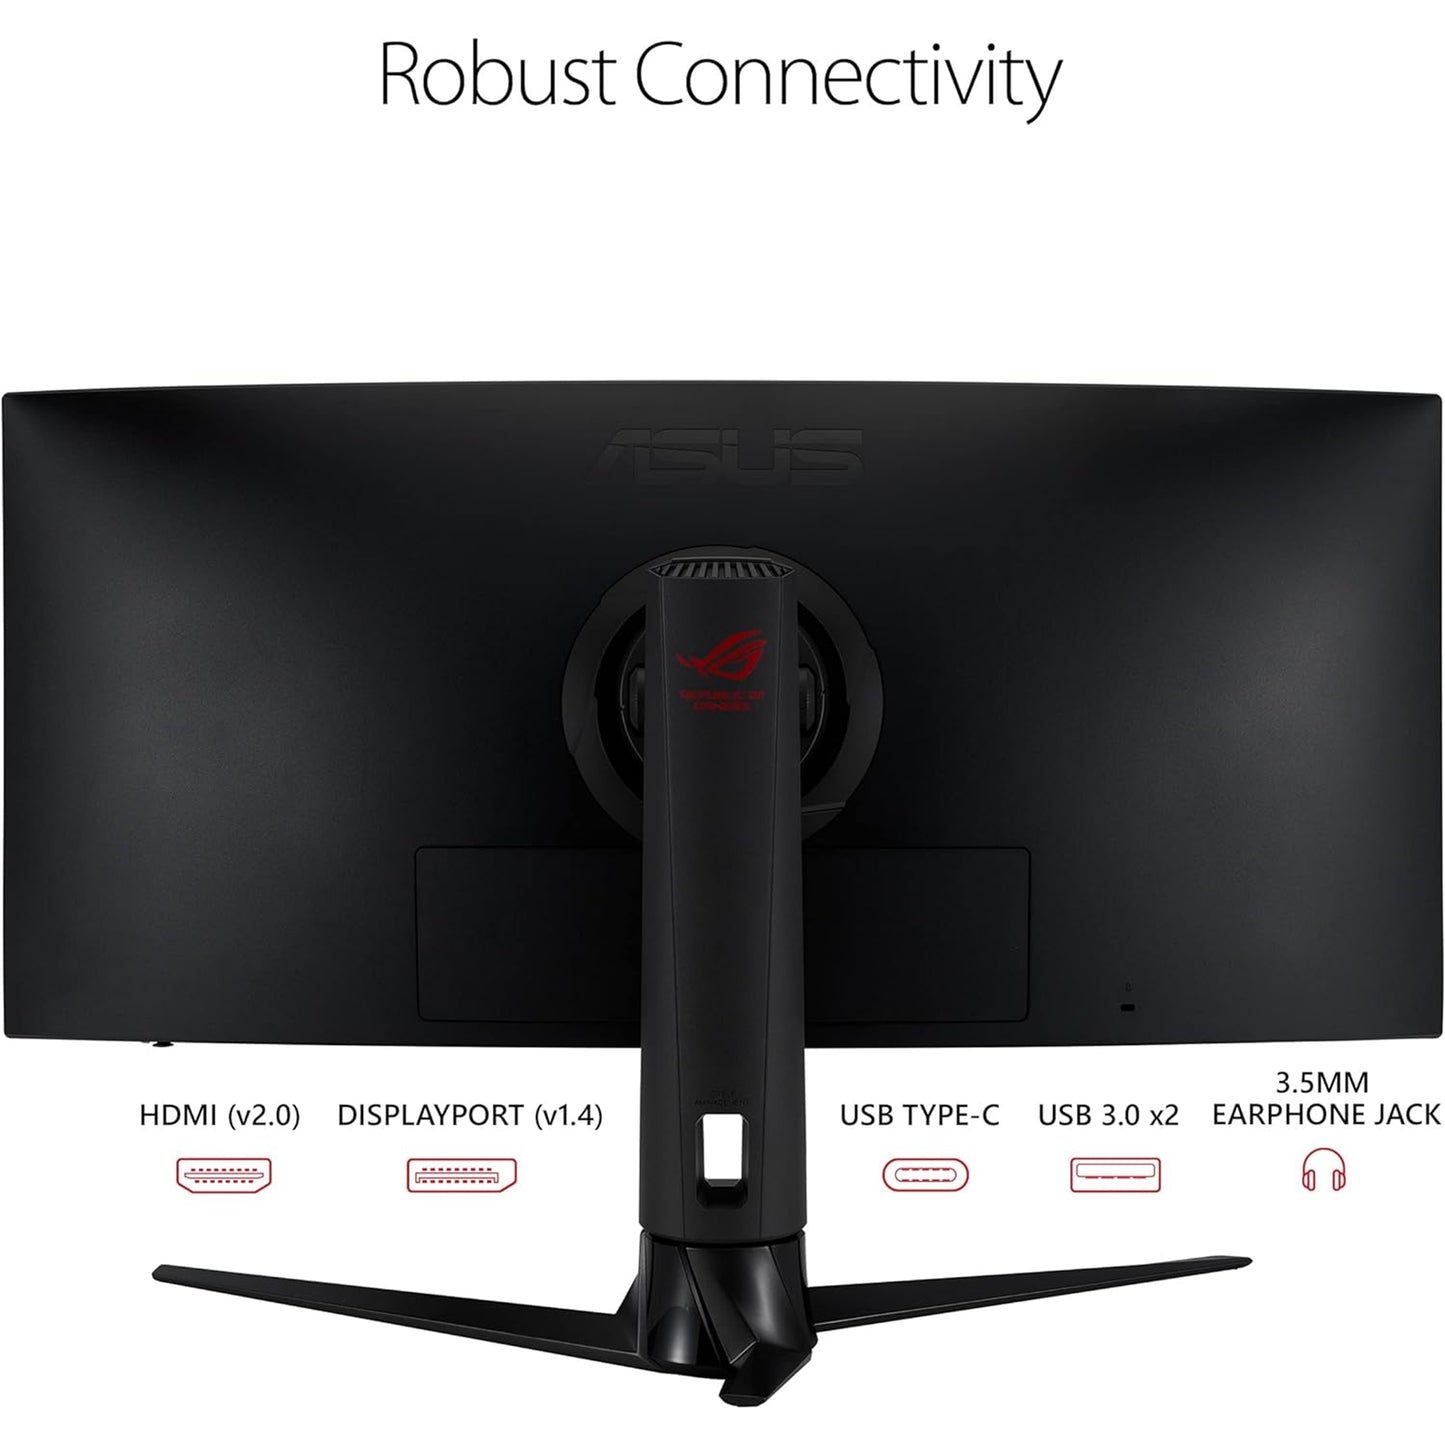 ASUS ROG Strix 34” Gaming Monitor (XG349C) - UWQHD (3440 x 1440), 180Hz, 1ms, Extreme Low Motion Blur Sync, 135% sRGB, G-Sync Compatible, DisplayHDR 400, Eye Care, USB-C, DisplayPort, HDMI, Black